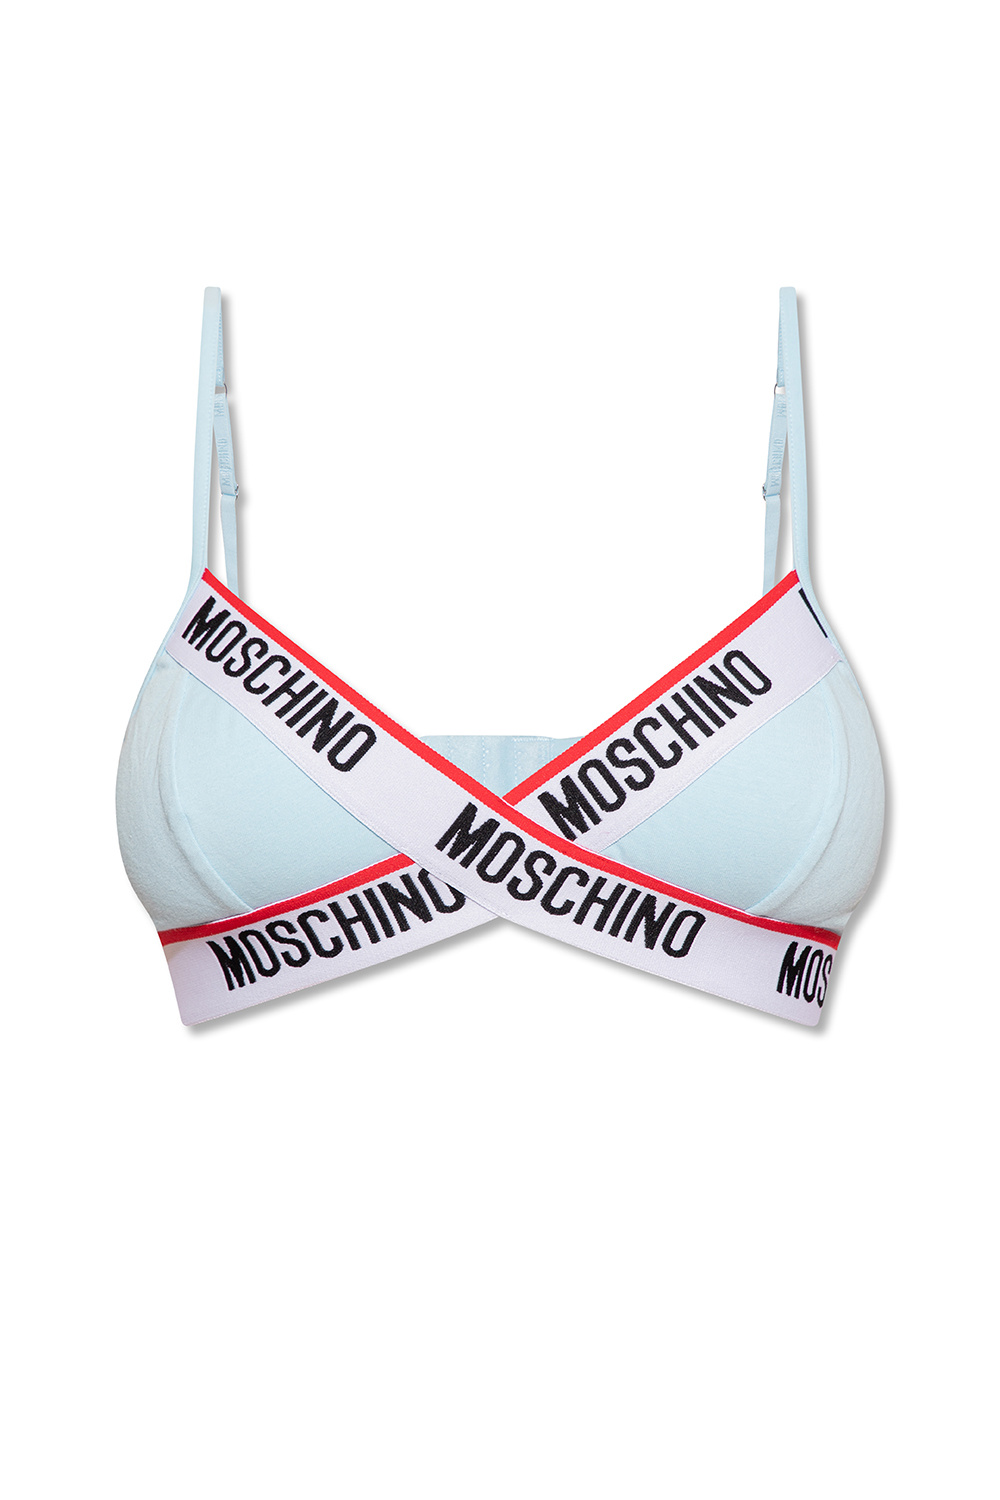 IetpShops, Moschino Branded bra, Women's Clothing